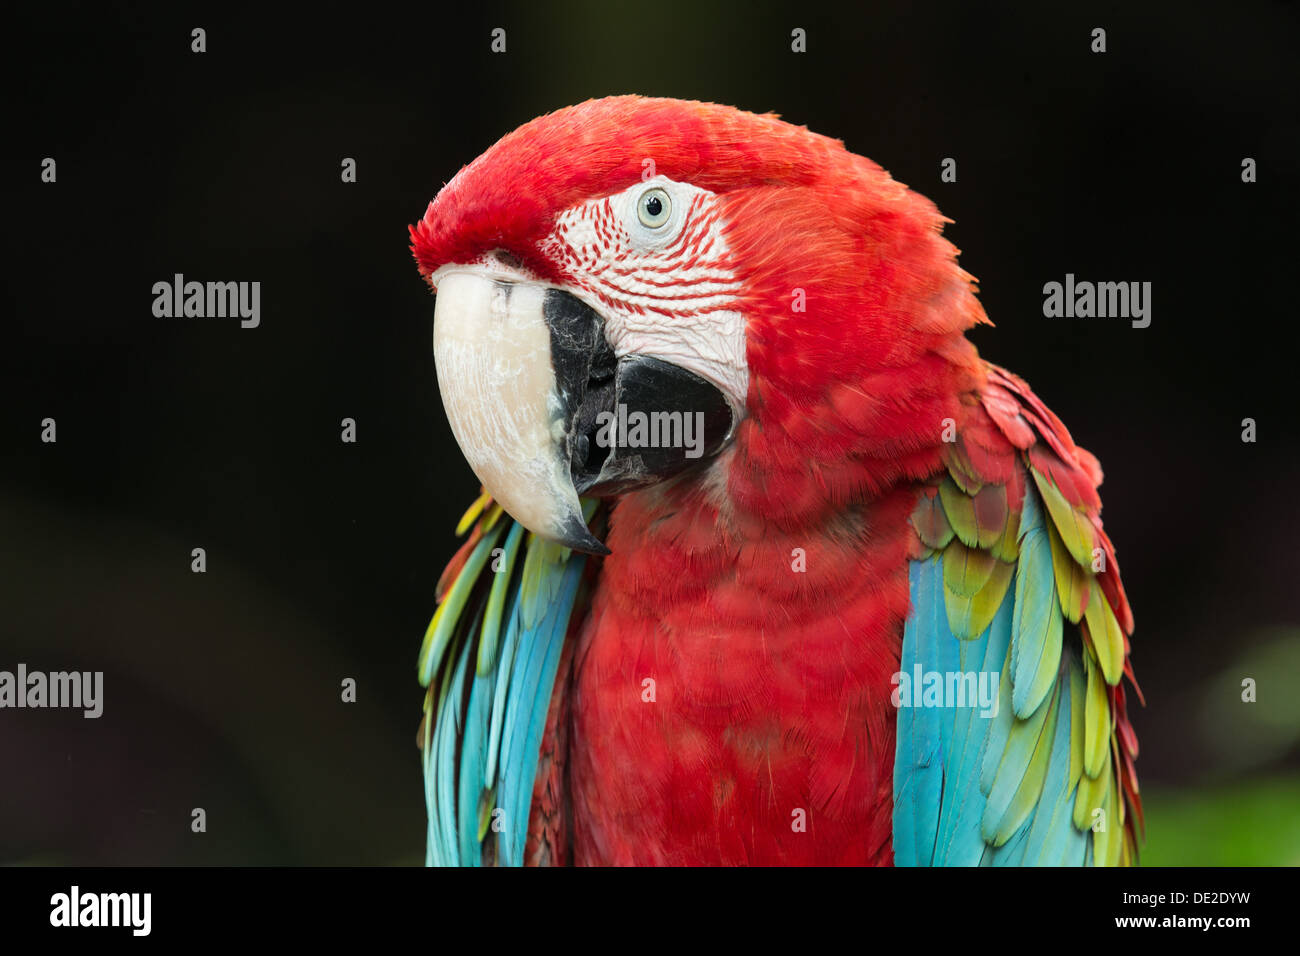 Parrot bird sentado en la perca Foto de stock